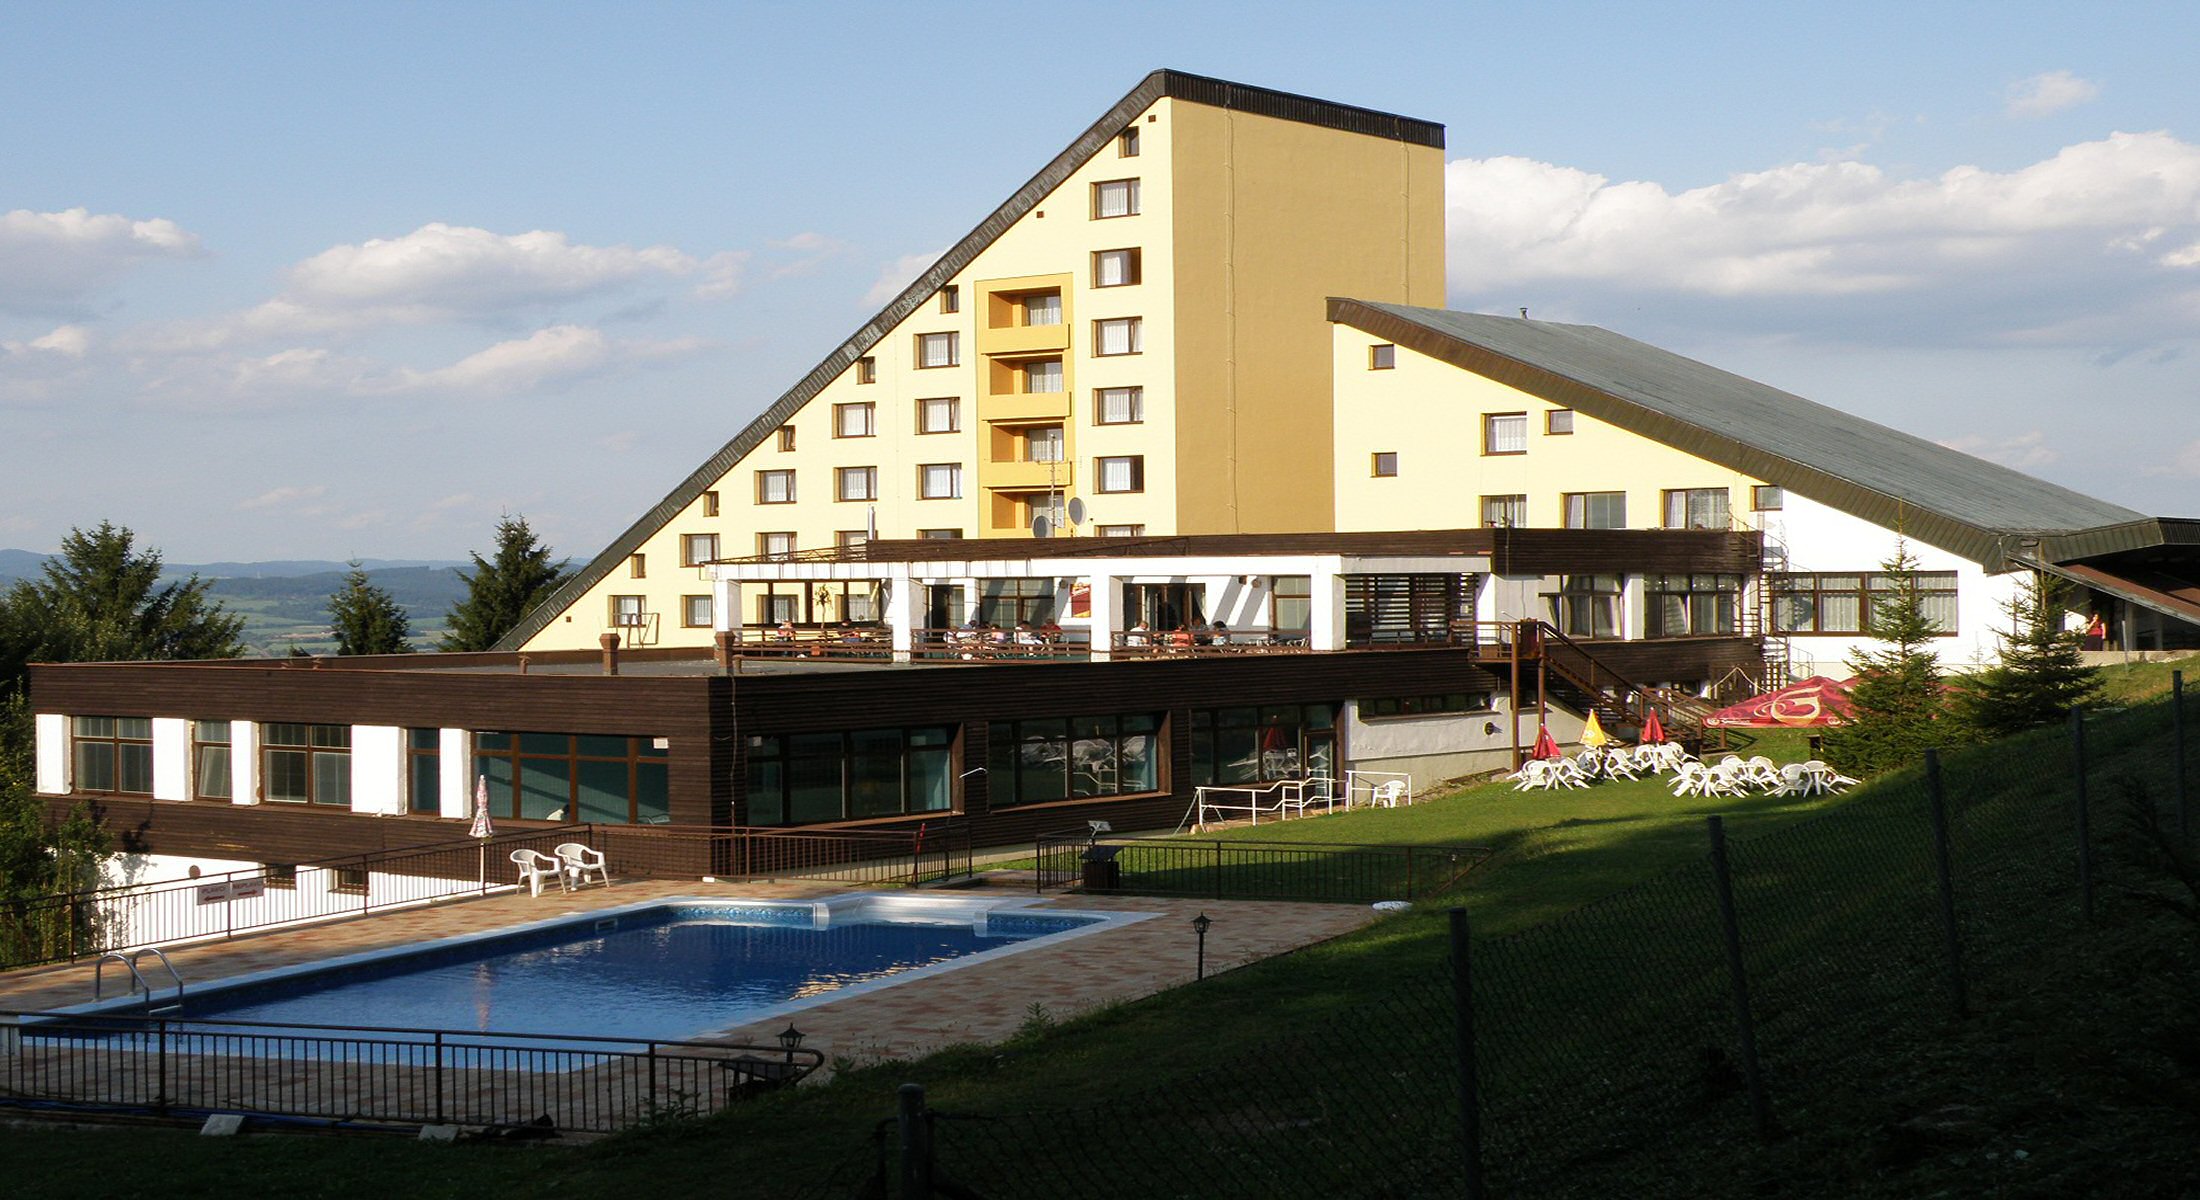 Hotel Jelenovska photo 1 - full size